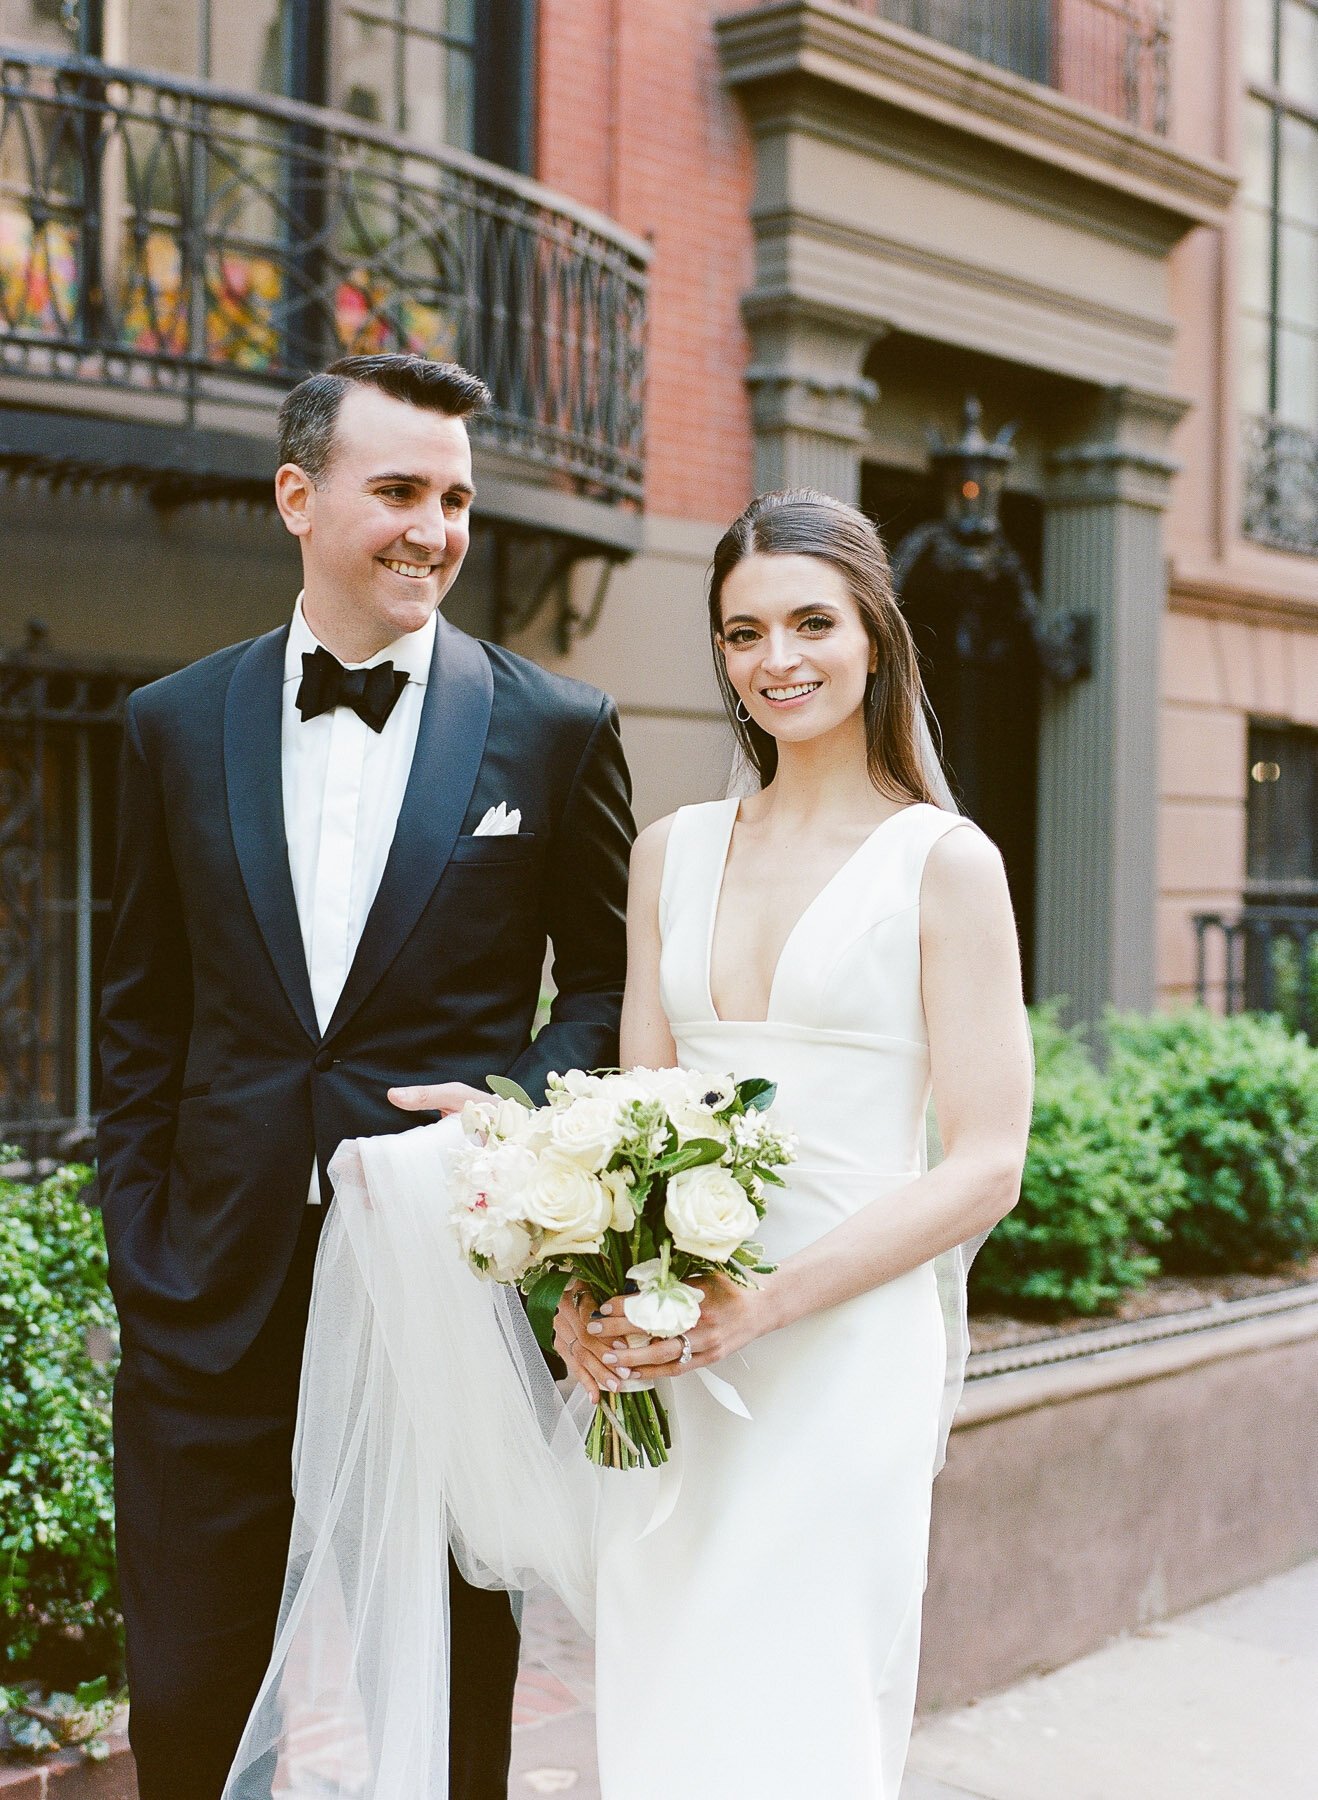 Gramercy Park wedding photos featuring Sarah Seven wedding dress and Tom James Tux